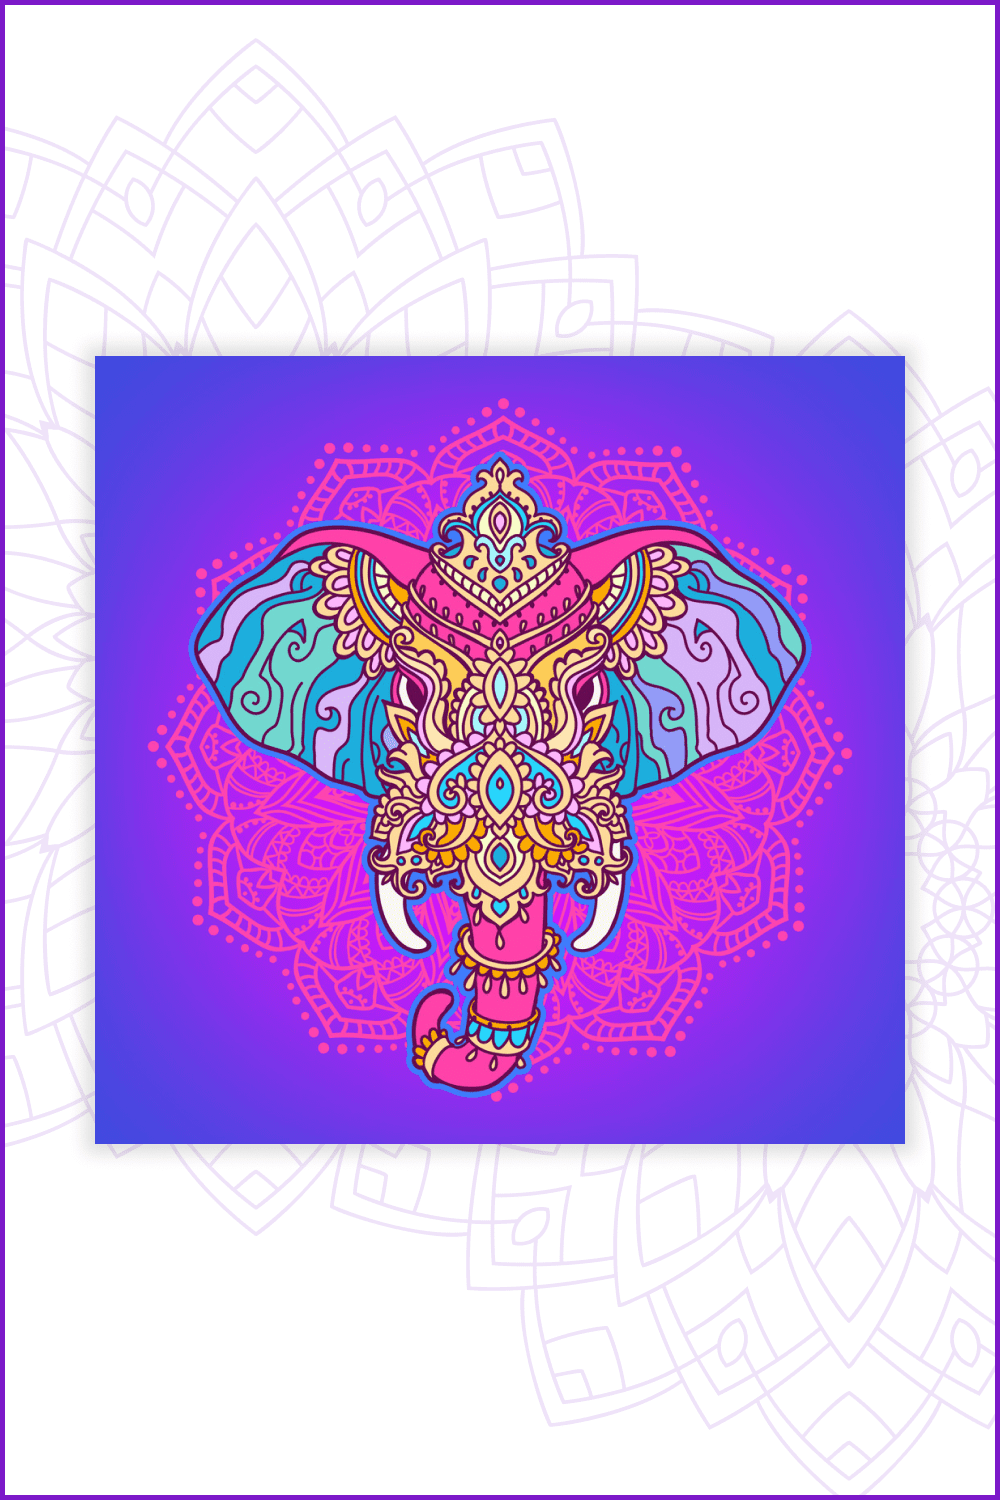 Neon colored elephant head in mandala style.